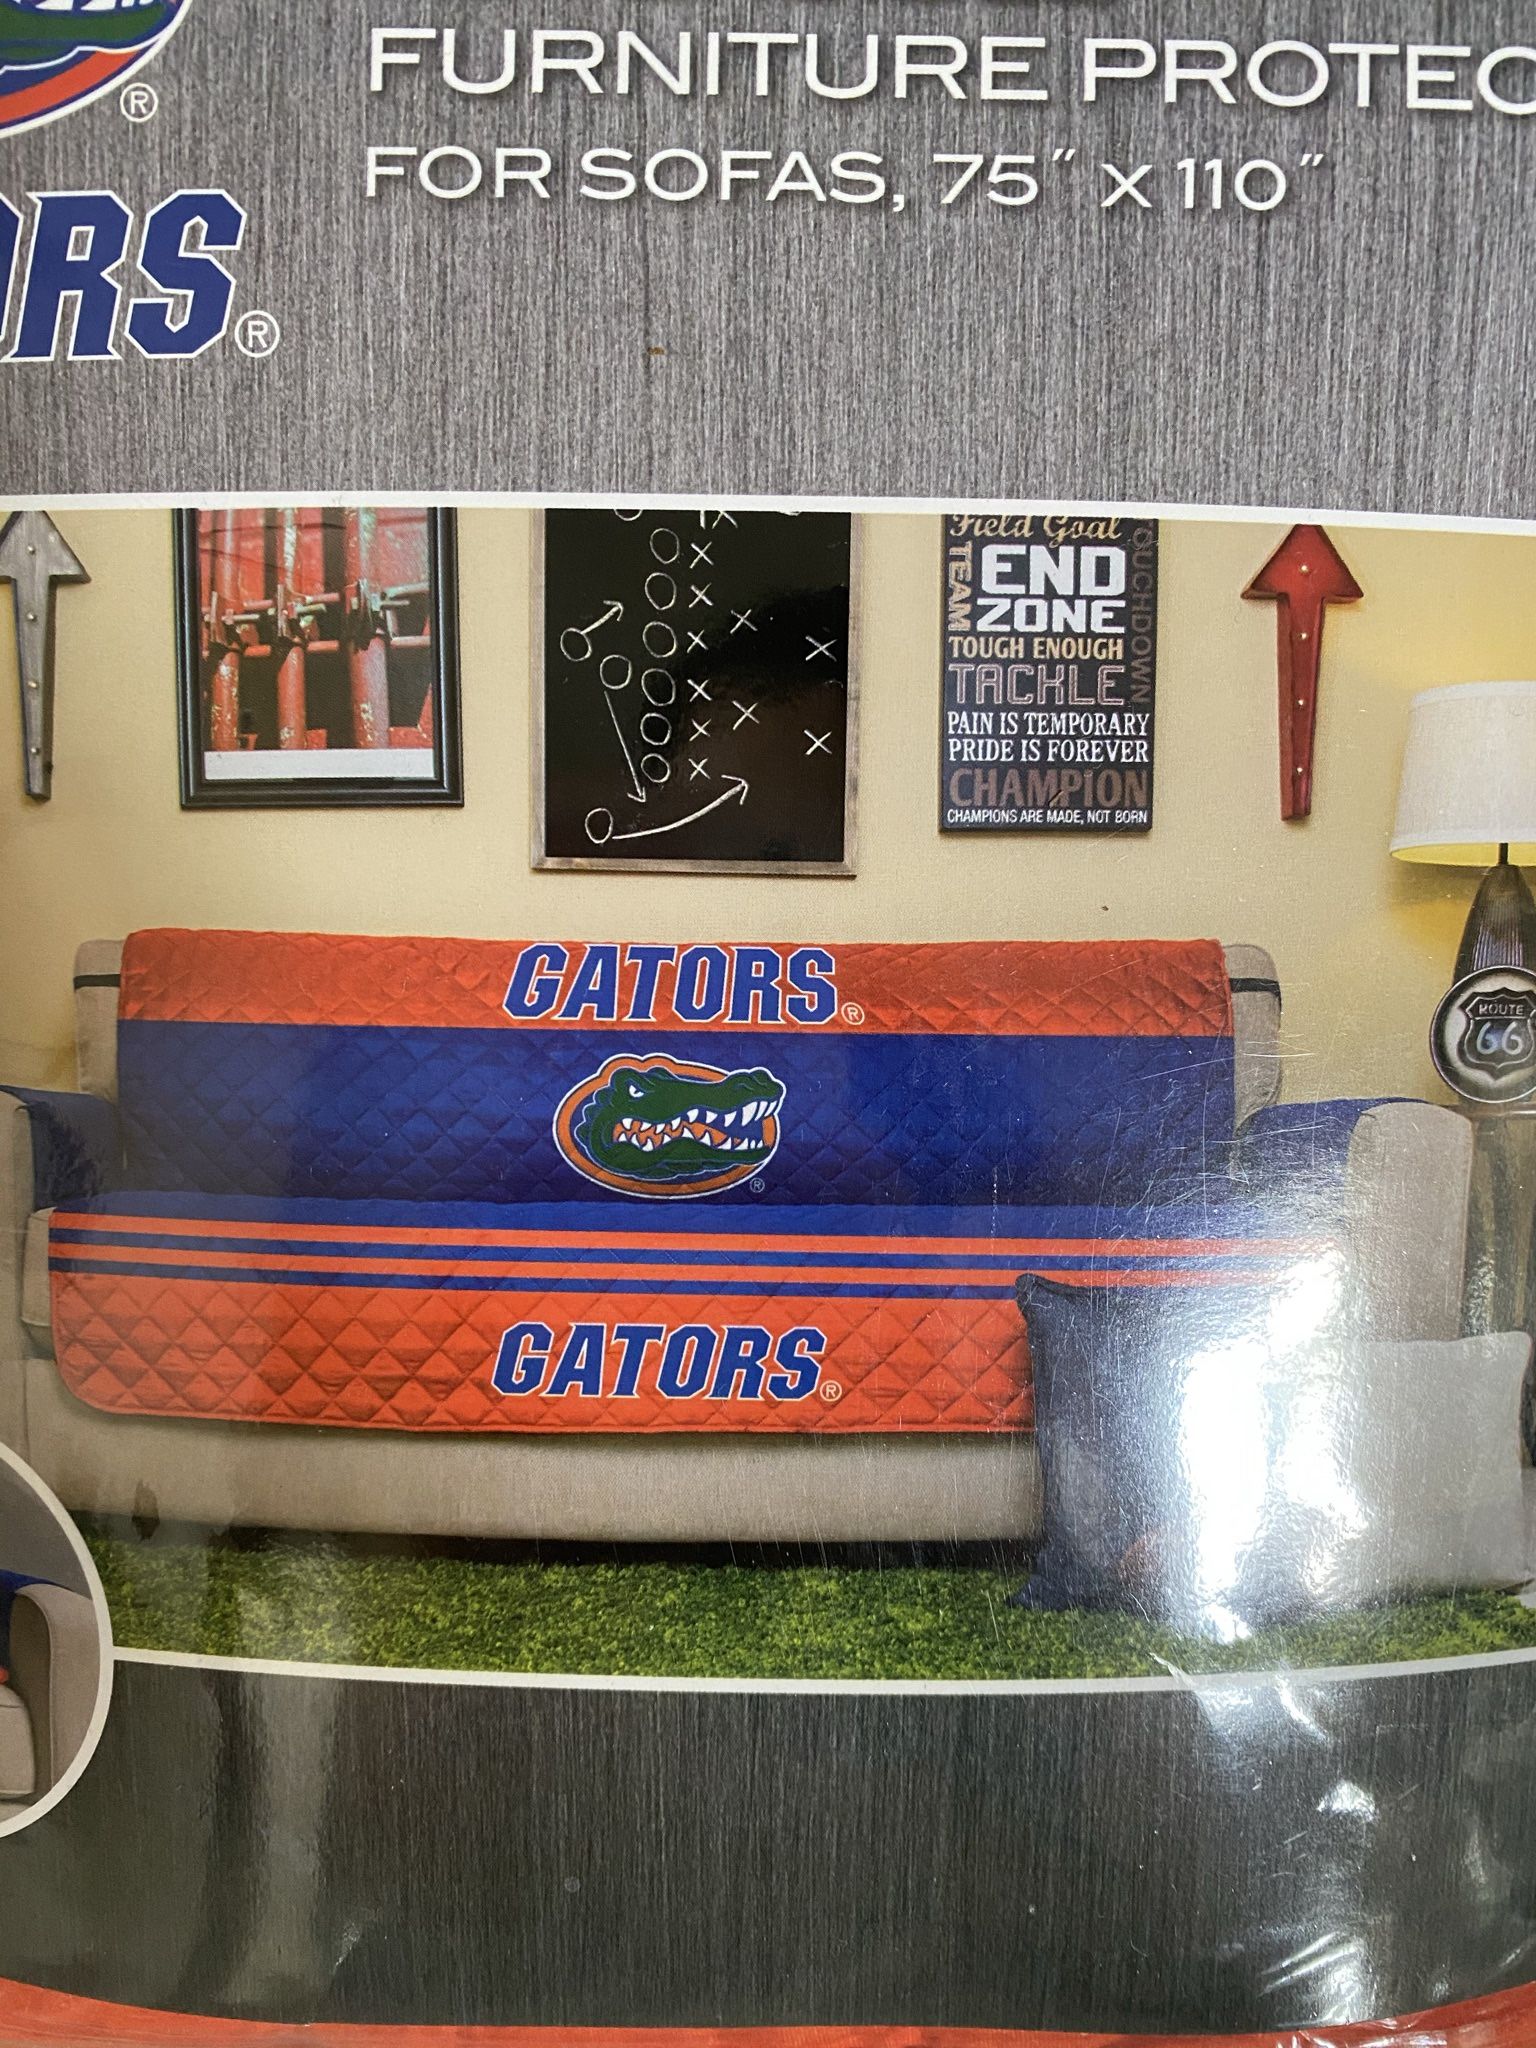 UF Gators Sofa Cover (New)